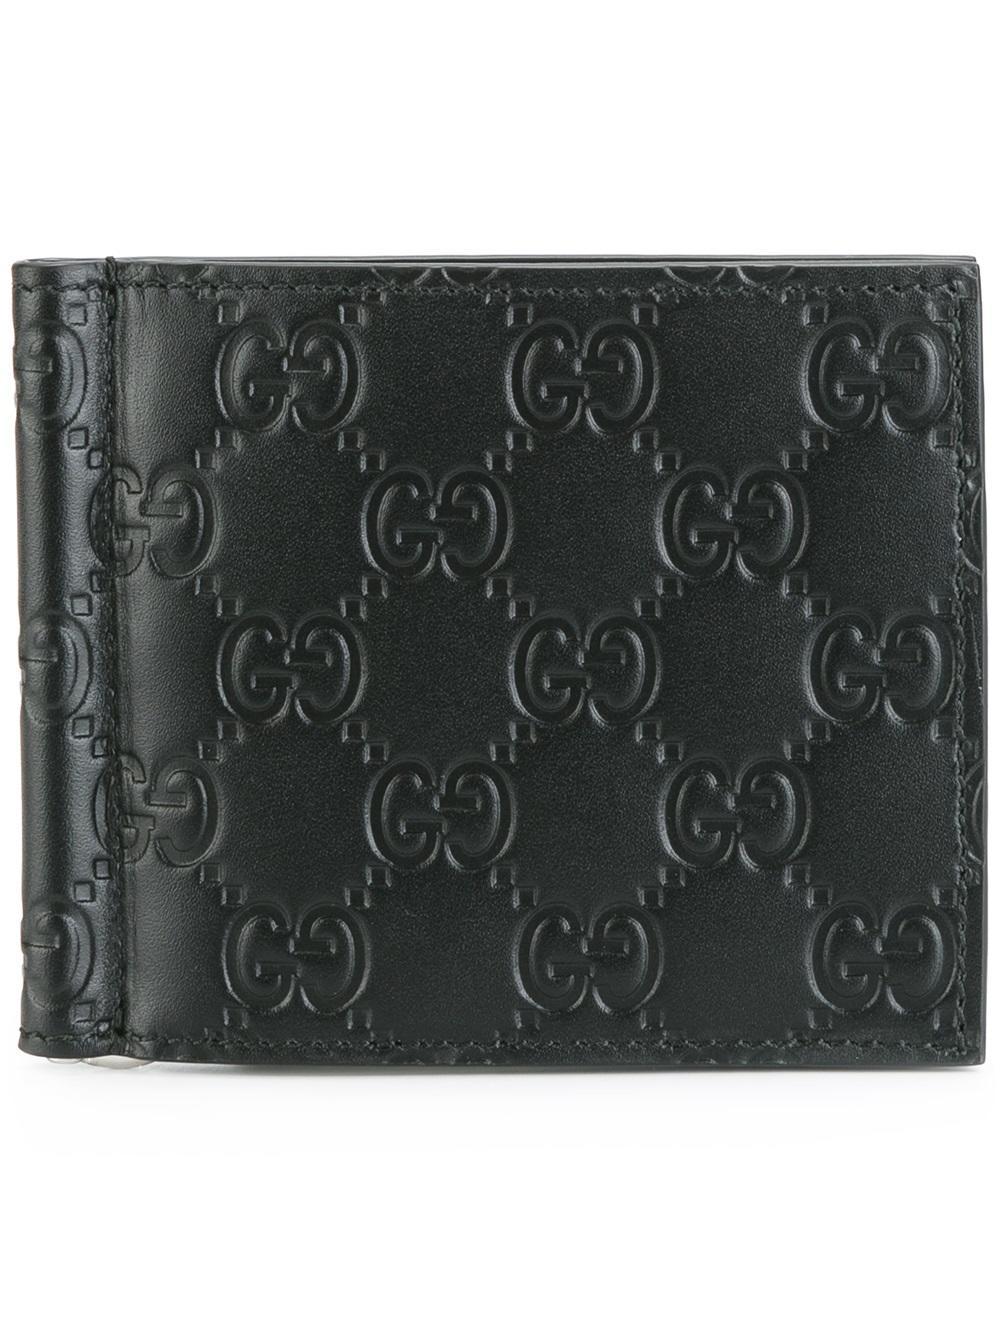 Gucci Signature Money Clip Wallet in Black for Men | Lyst